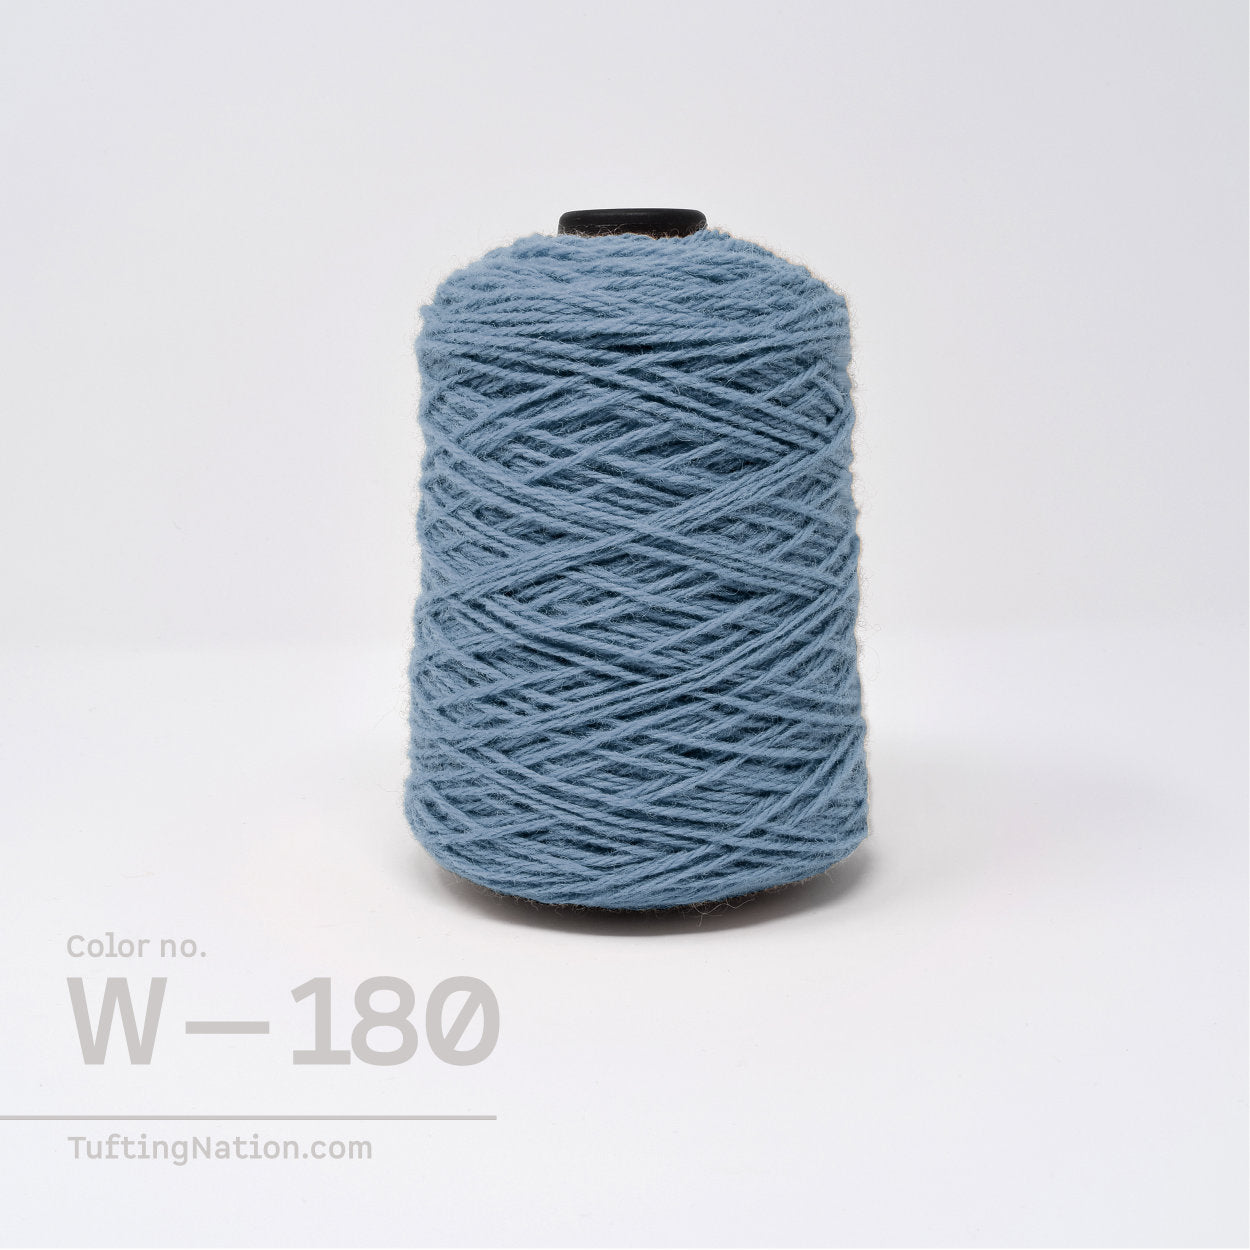 500g 1.1 Lb 100% Wool Yarn Cones for Tufting Gun, 2 Ply 4ply 6ply Rug  Merino Yarns , Tufting Yarns Handmade Weaving Crochet Knitting 